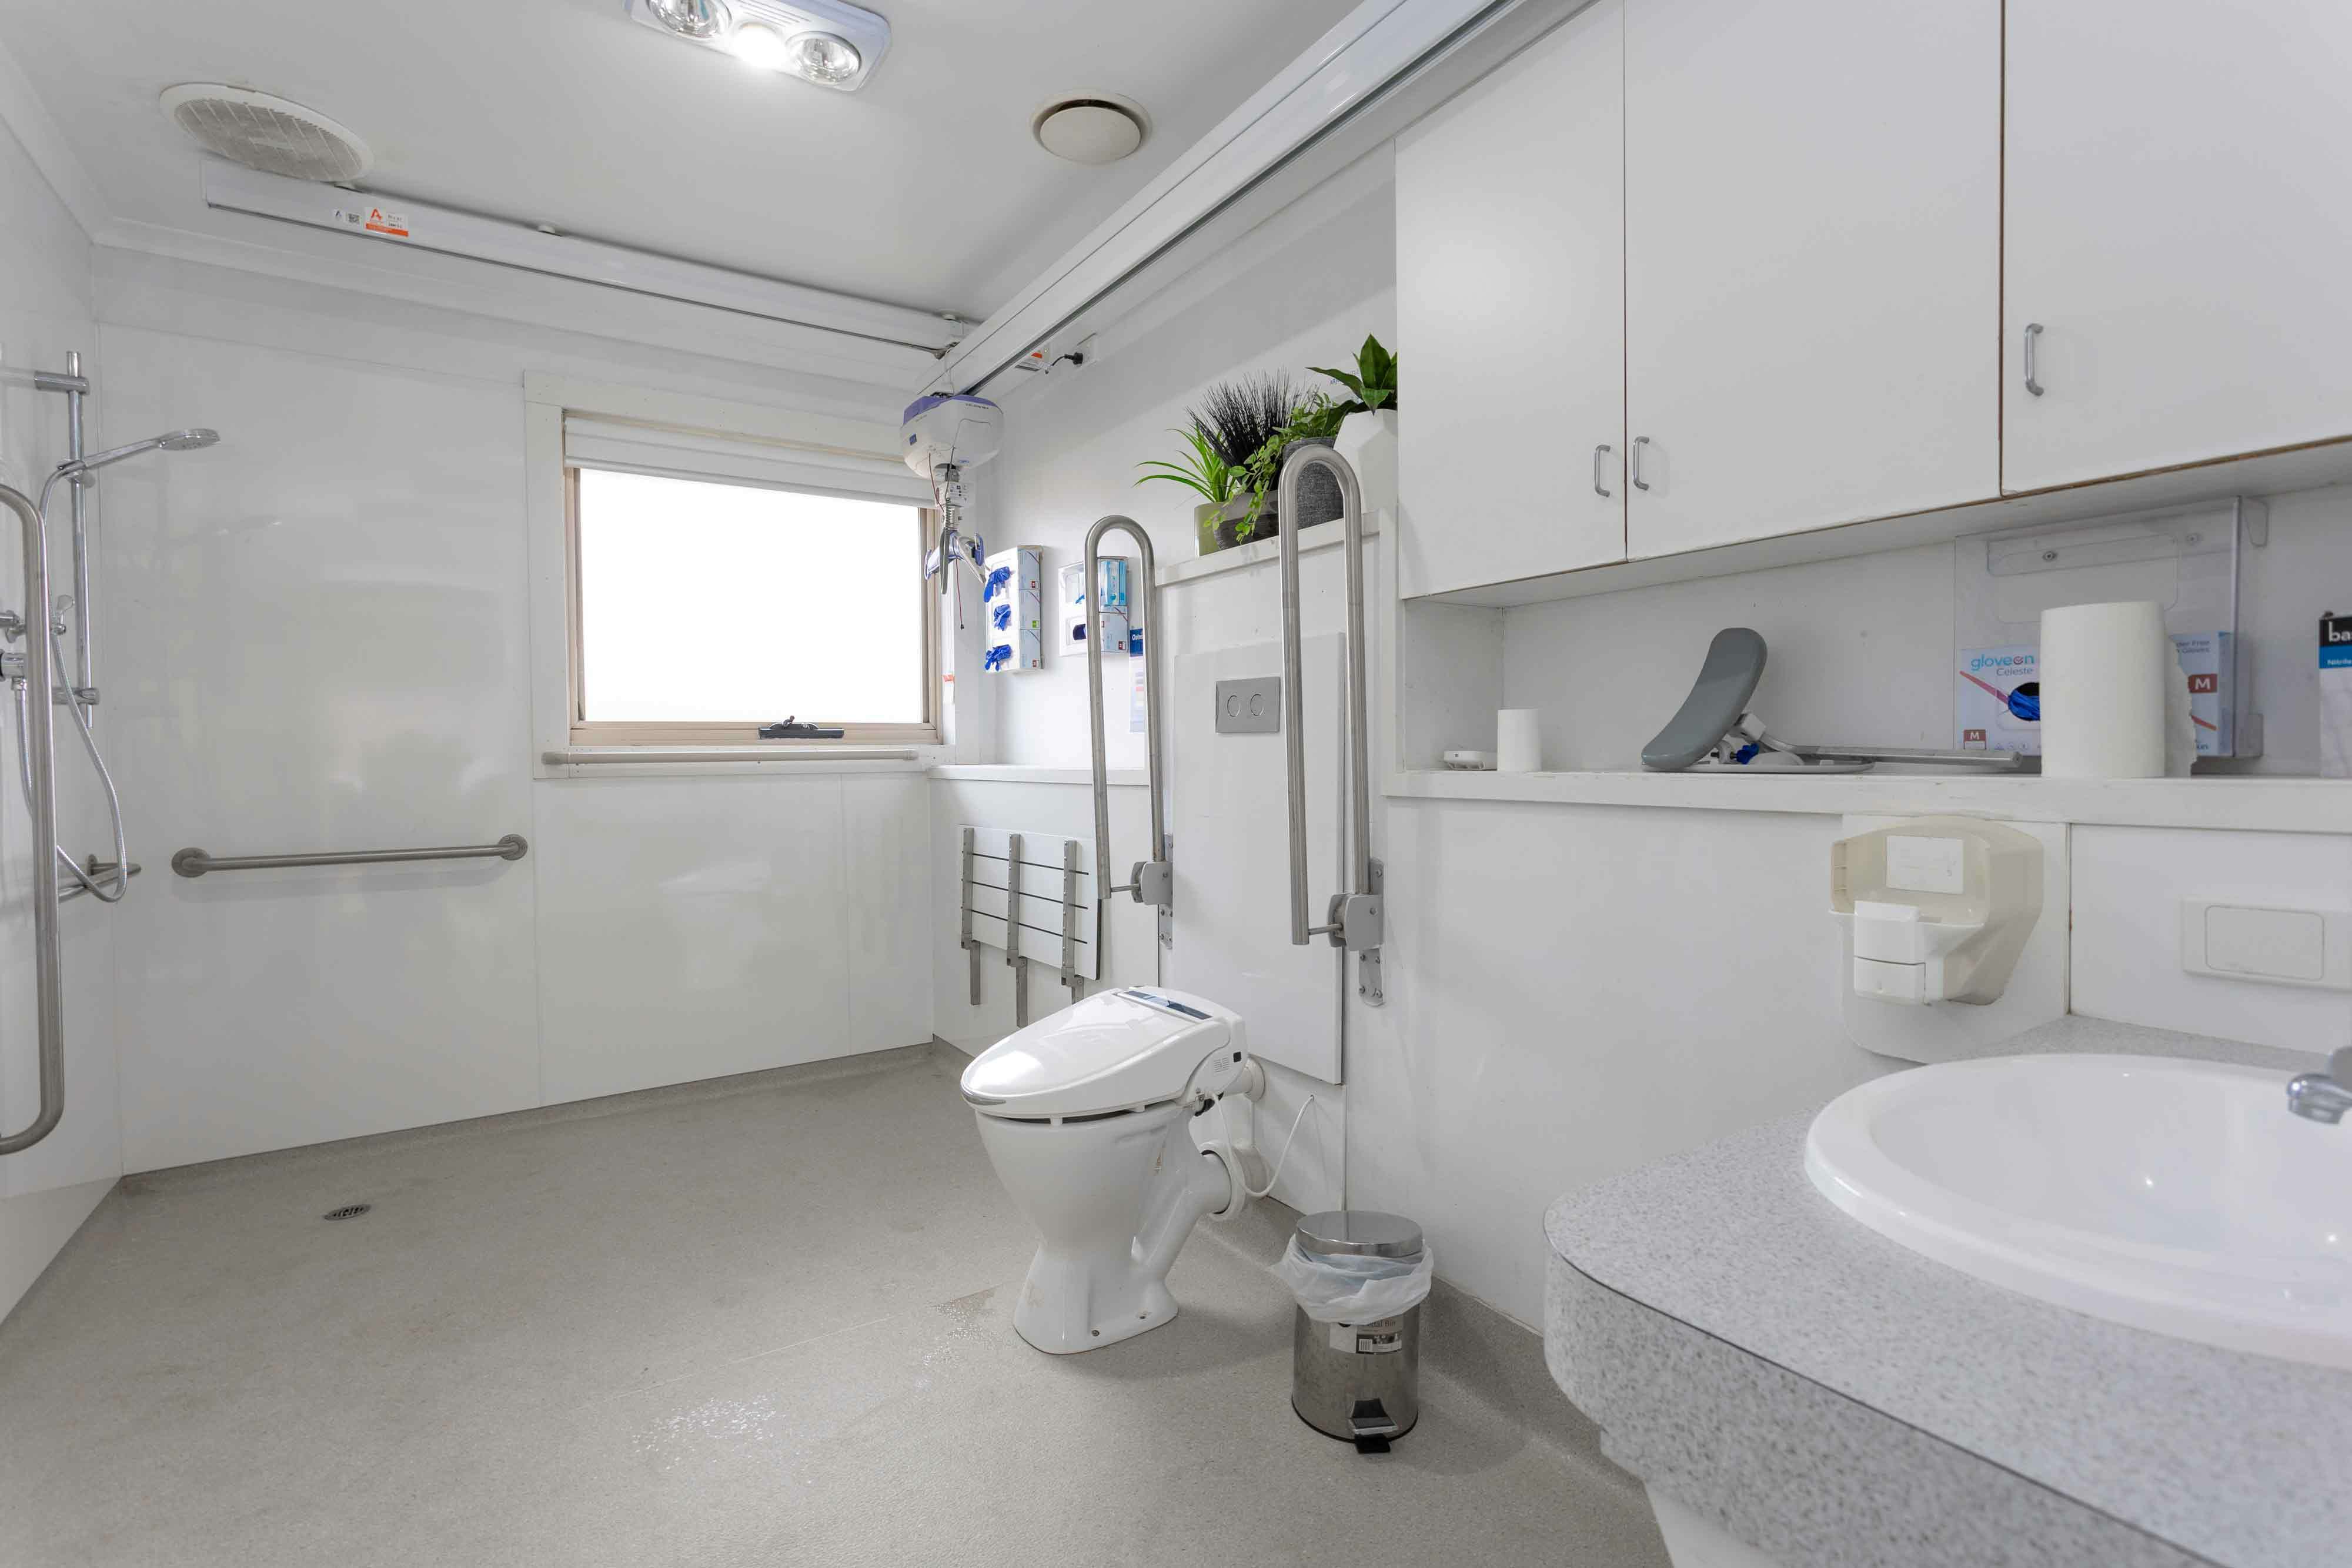 Bathroom of SDA home in Warrnambool